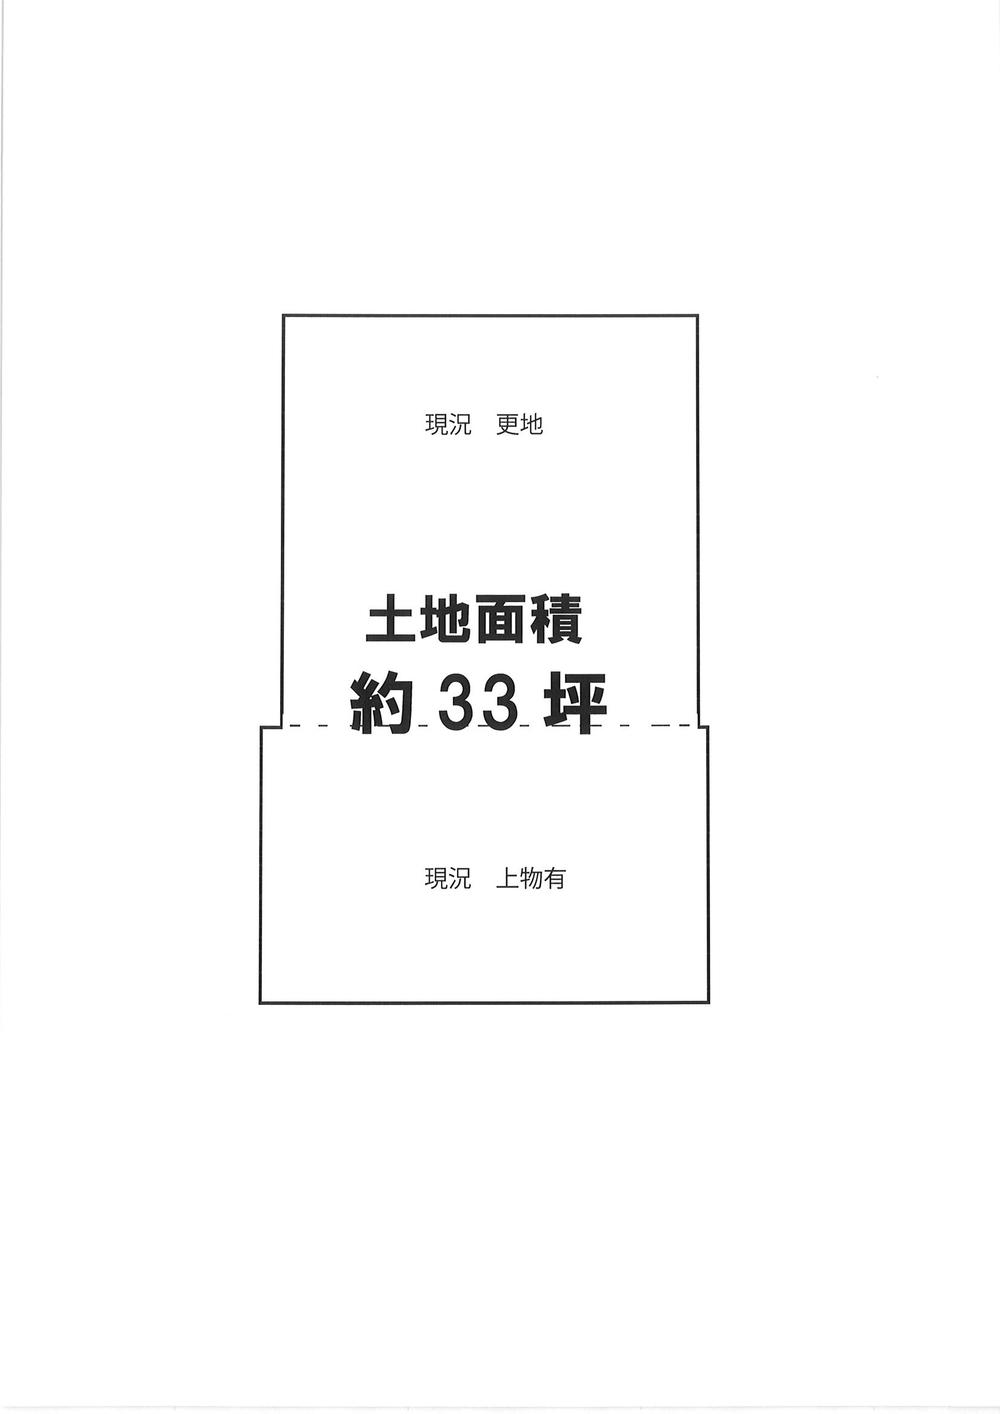 Compartment figure. Land price 22.5 million yen, Land area 109.37 sq m